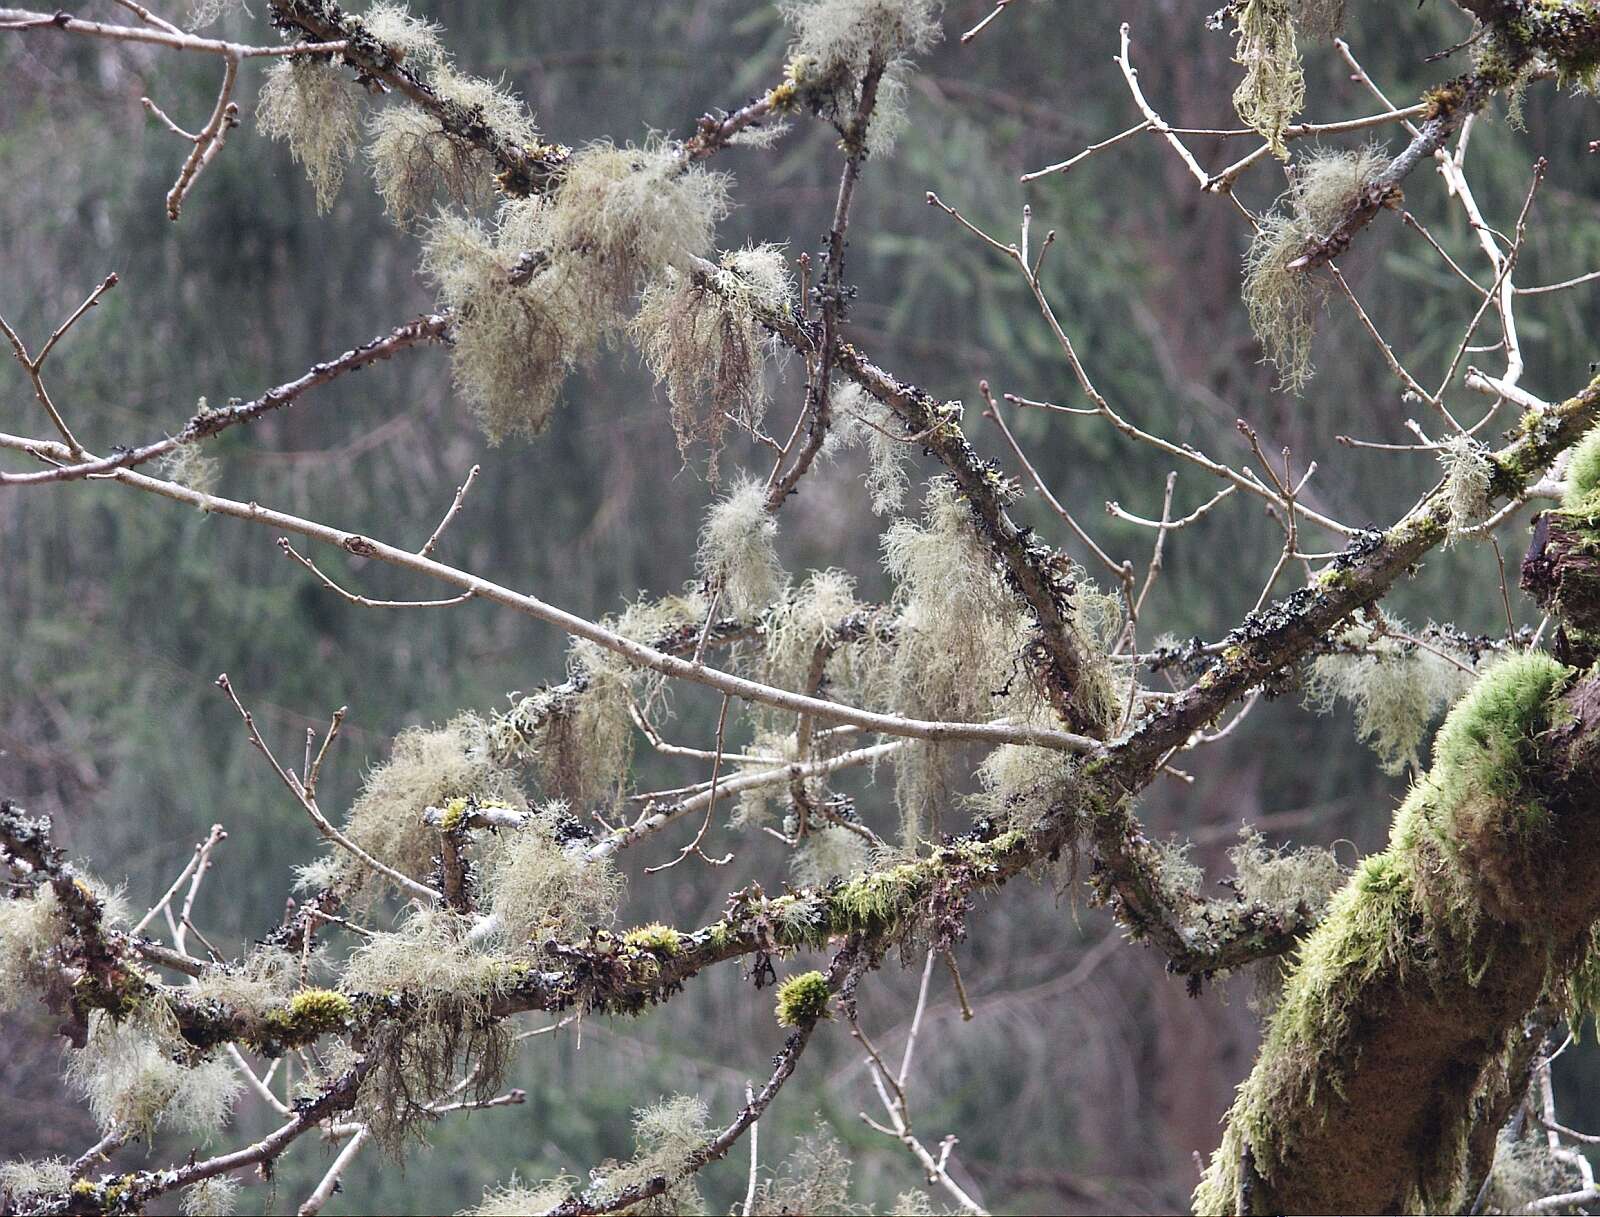 Image of Beard lichen